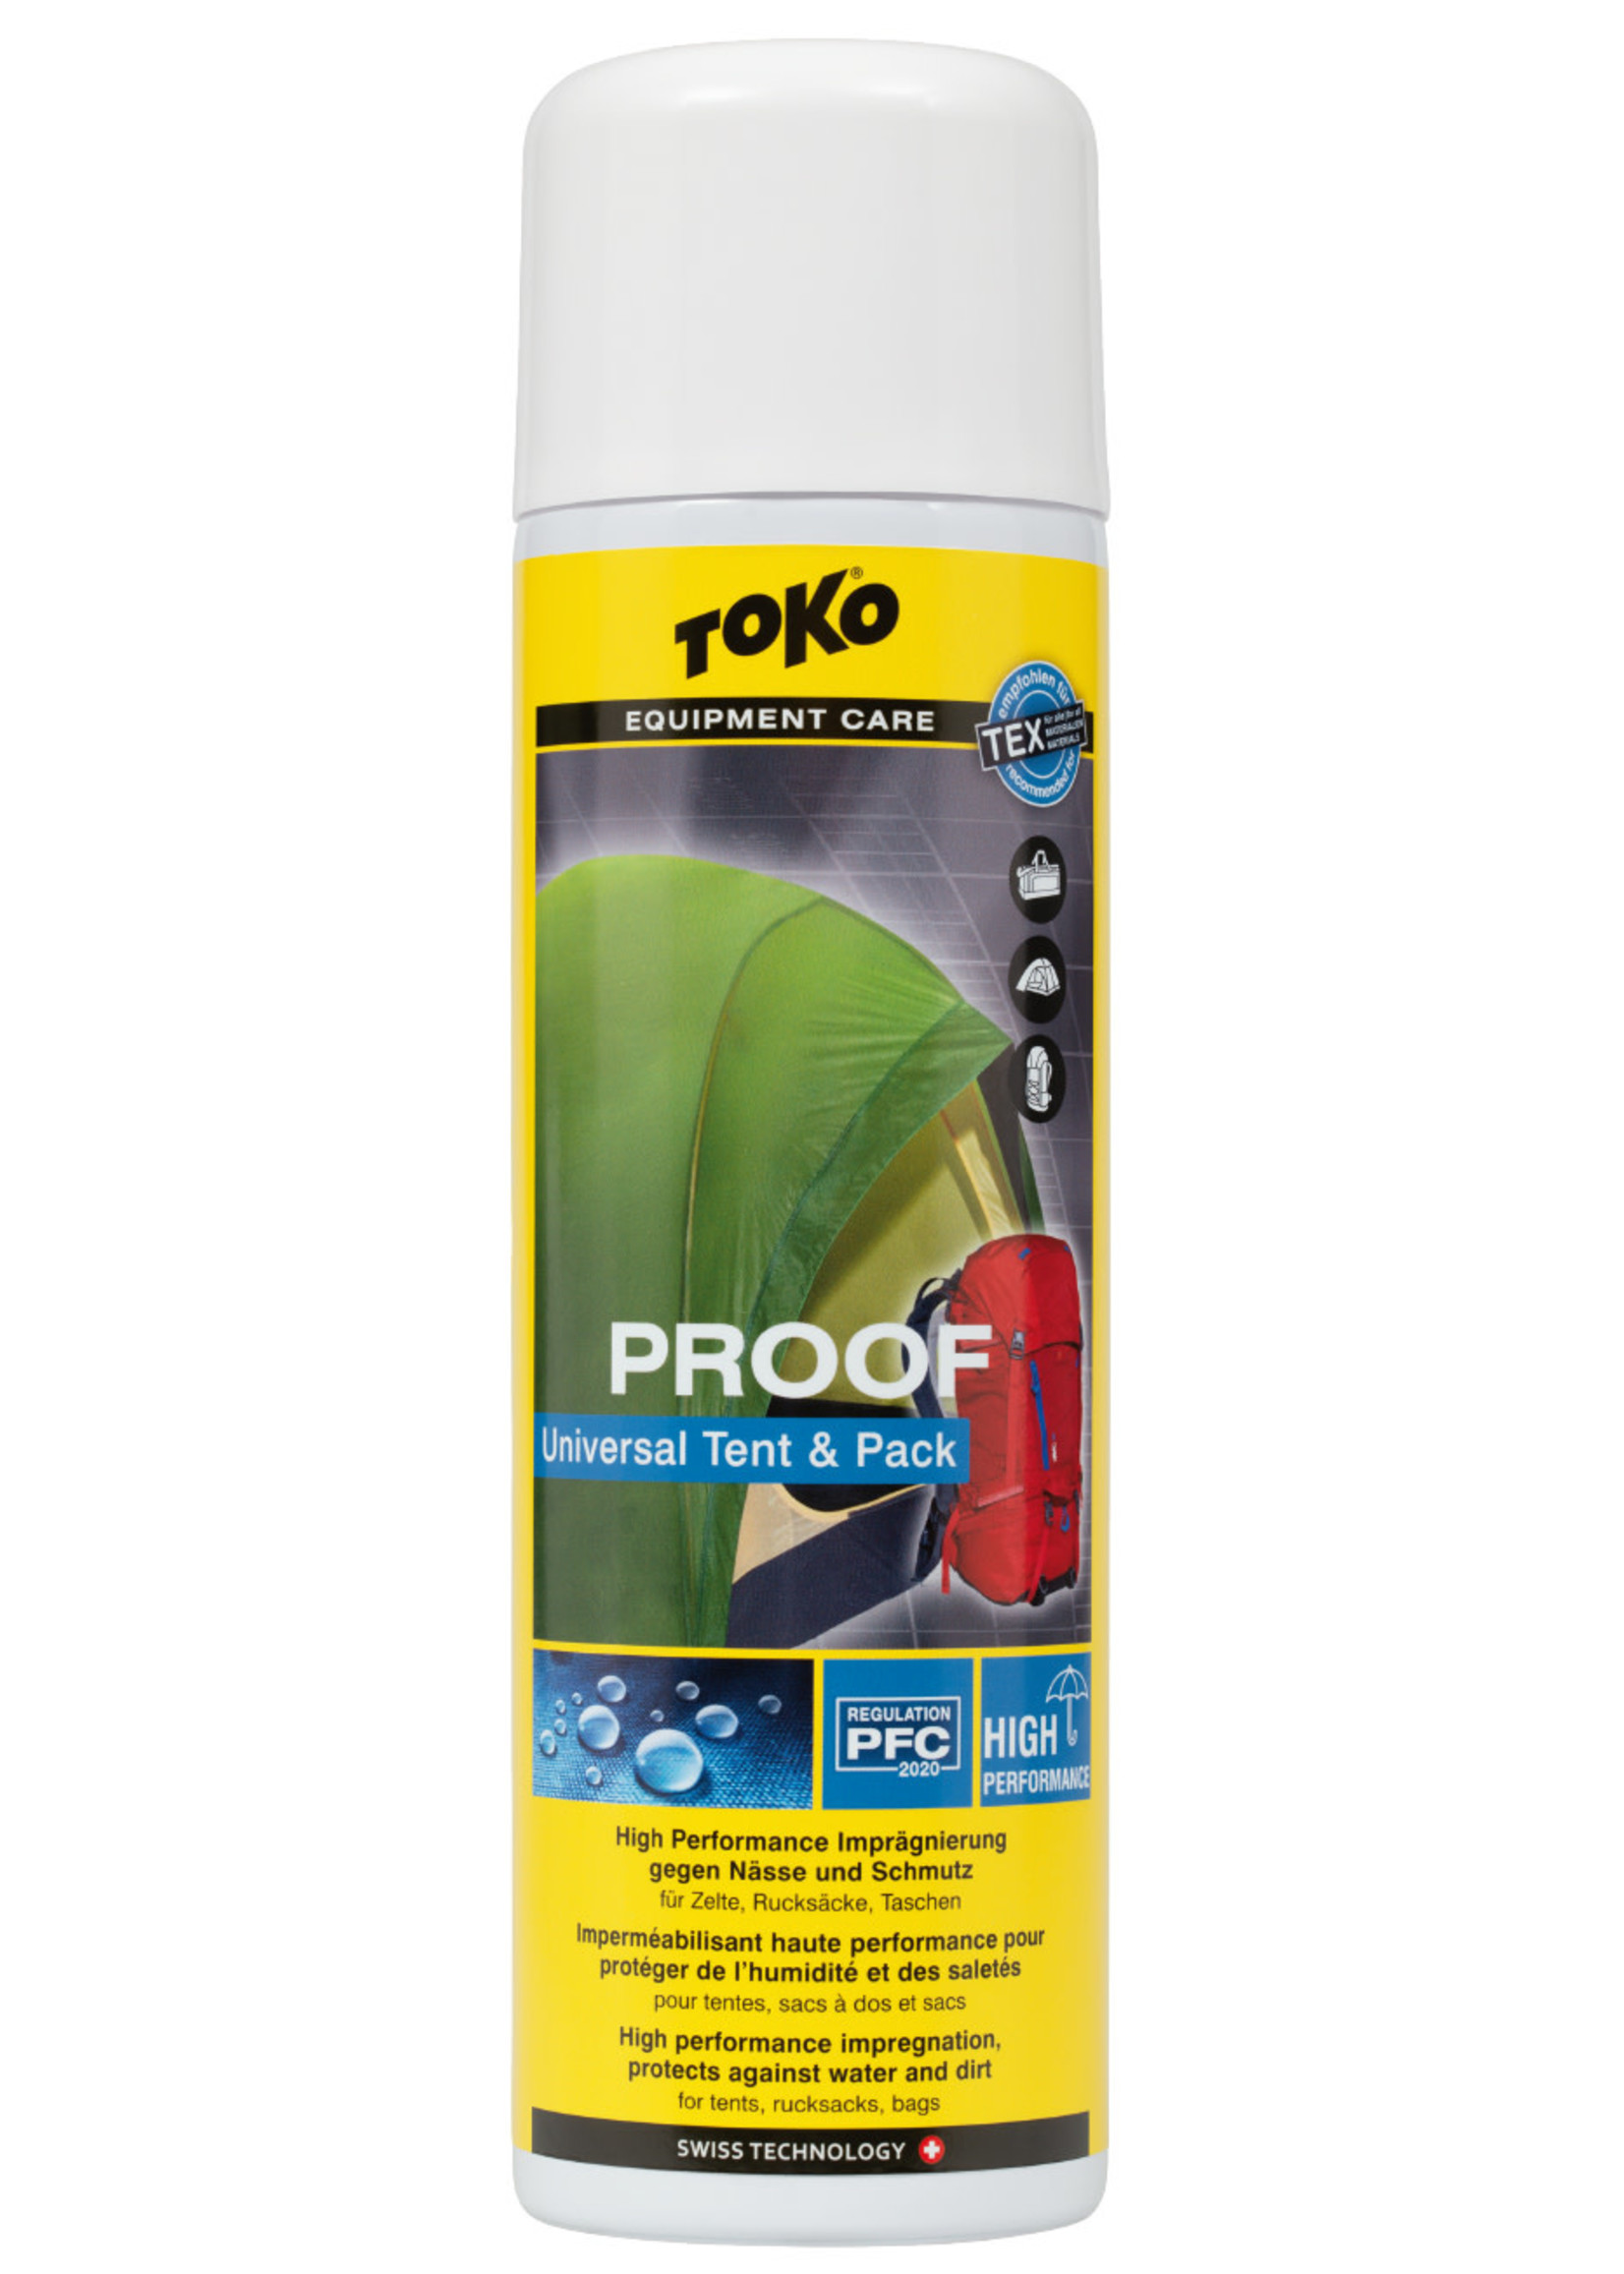 Toko Toko Equipment Care Proof Tent & Pack